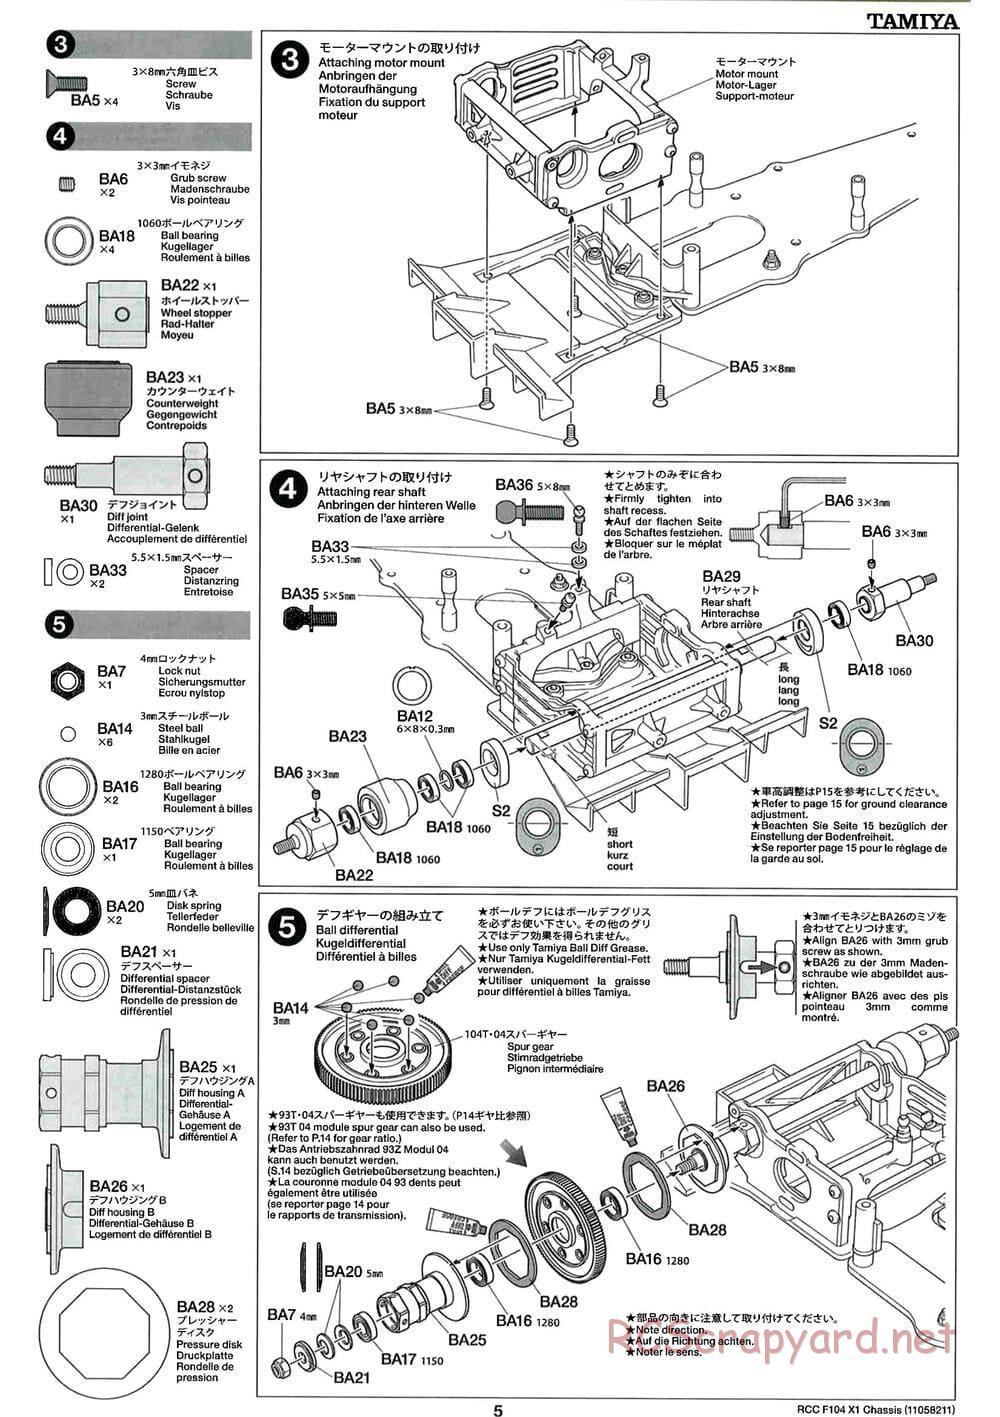 Tamiya - F104X1 Chassis - Manual - Page 5